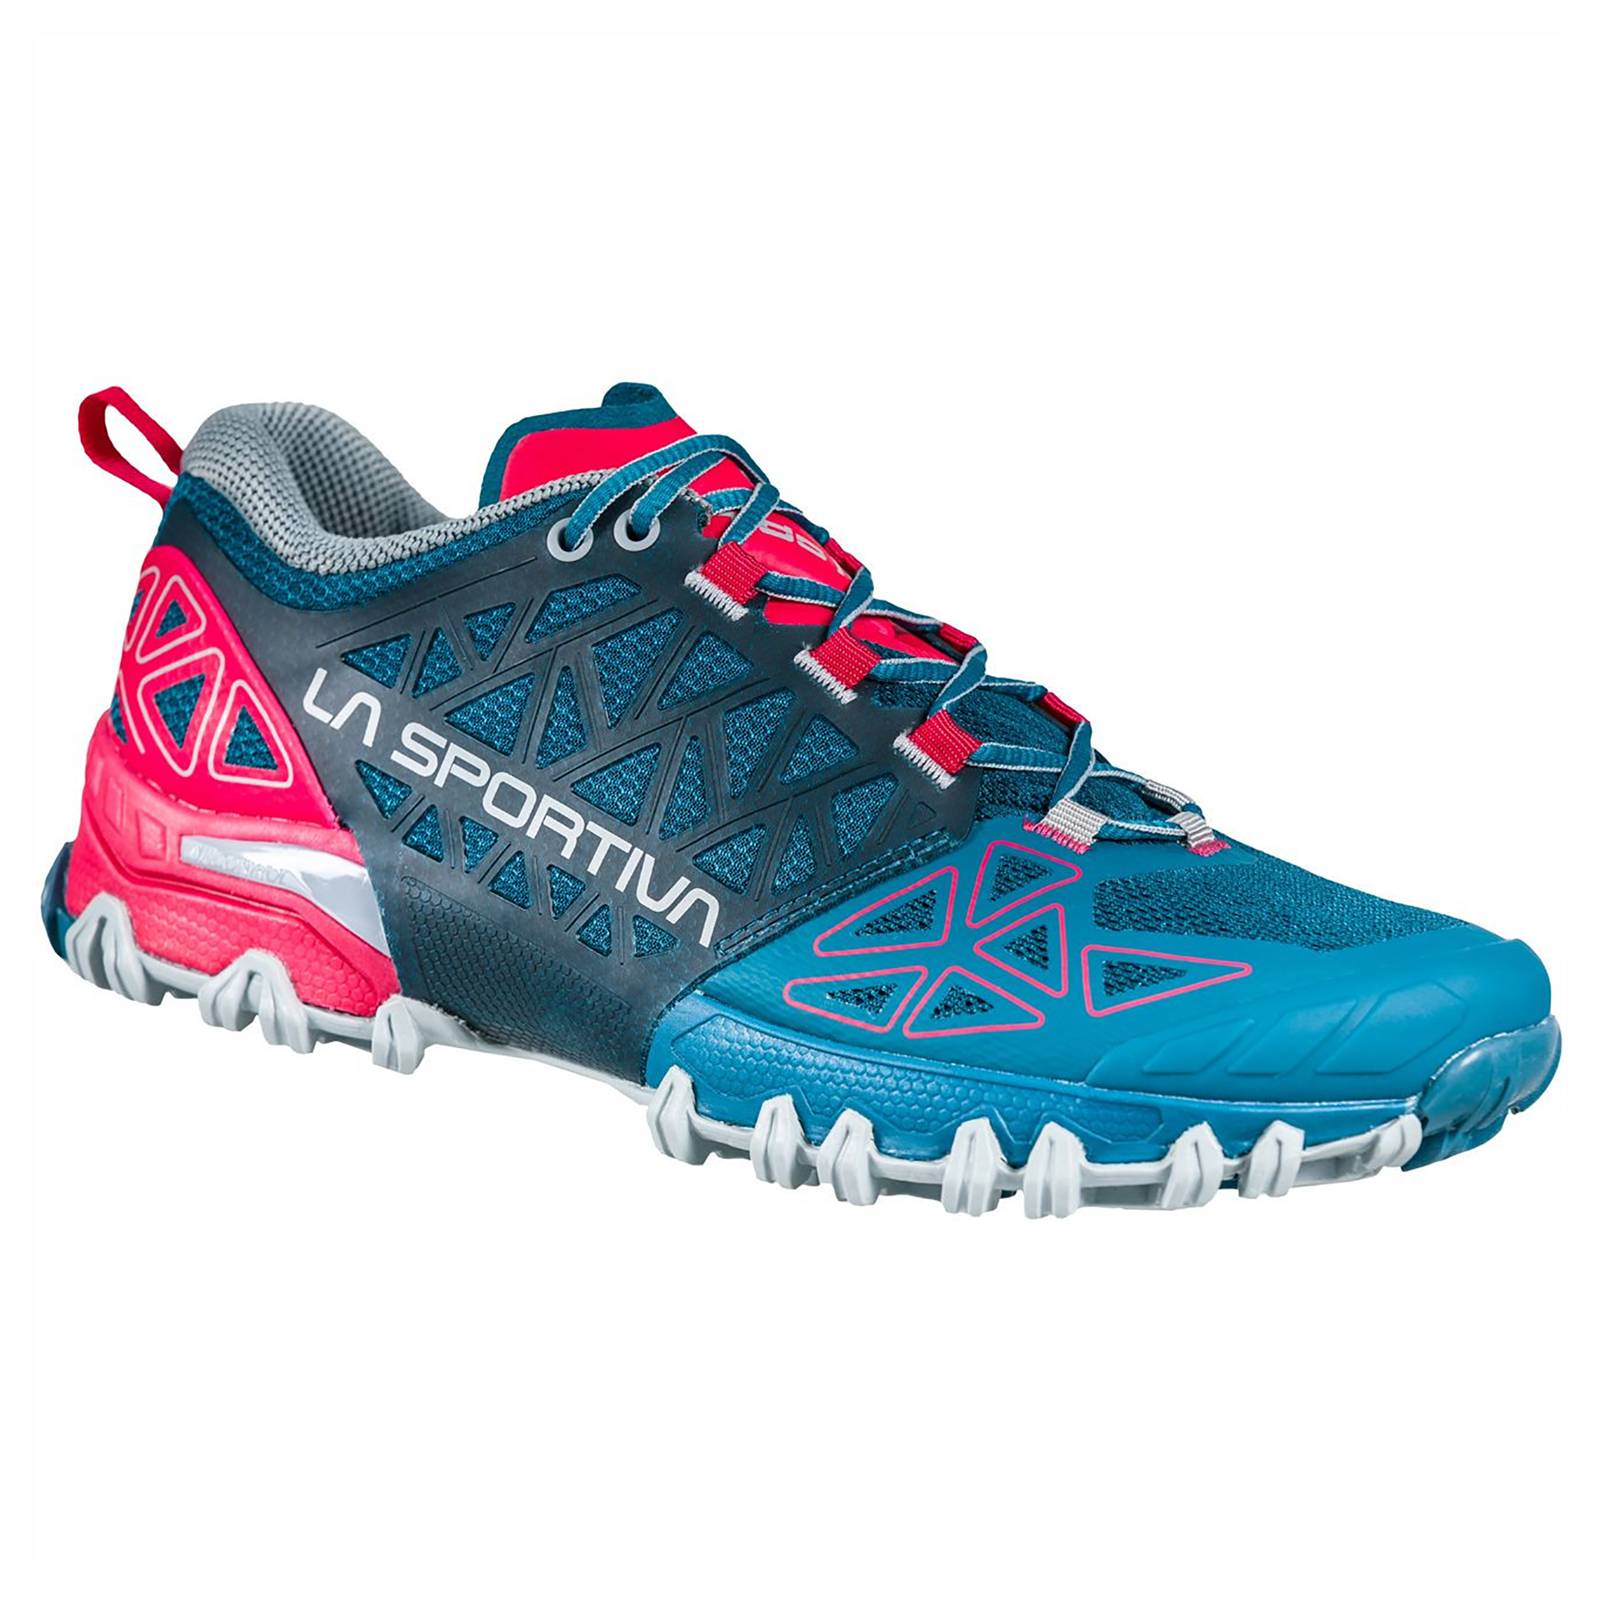 LA SPORTIVA Bushido II Damen Trail Running Schuhe blau